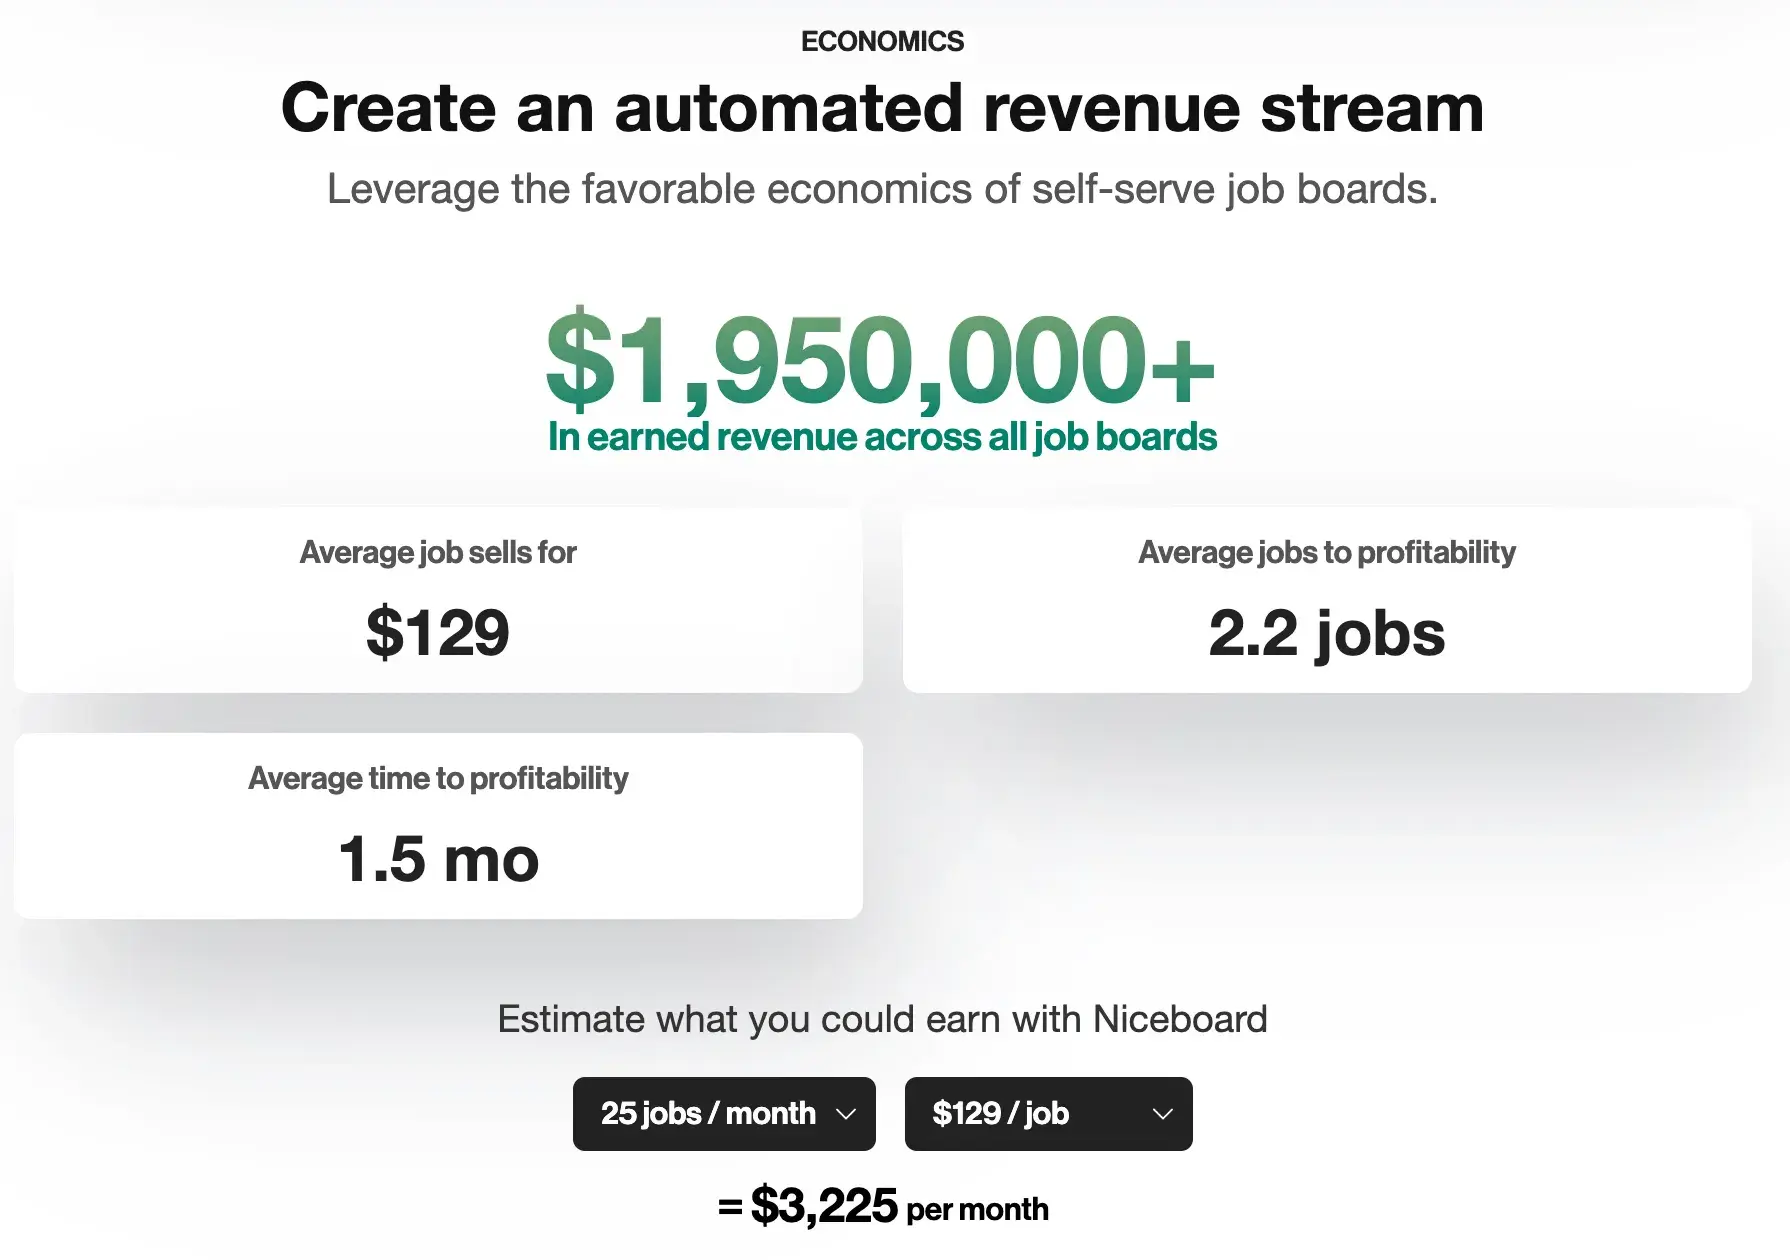 Niceboard’s revenue calculator is a great digital marketing tactic